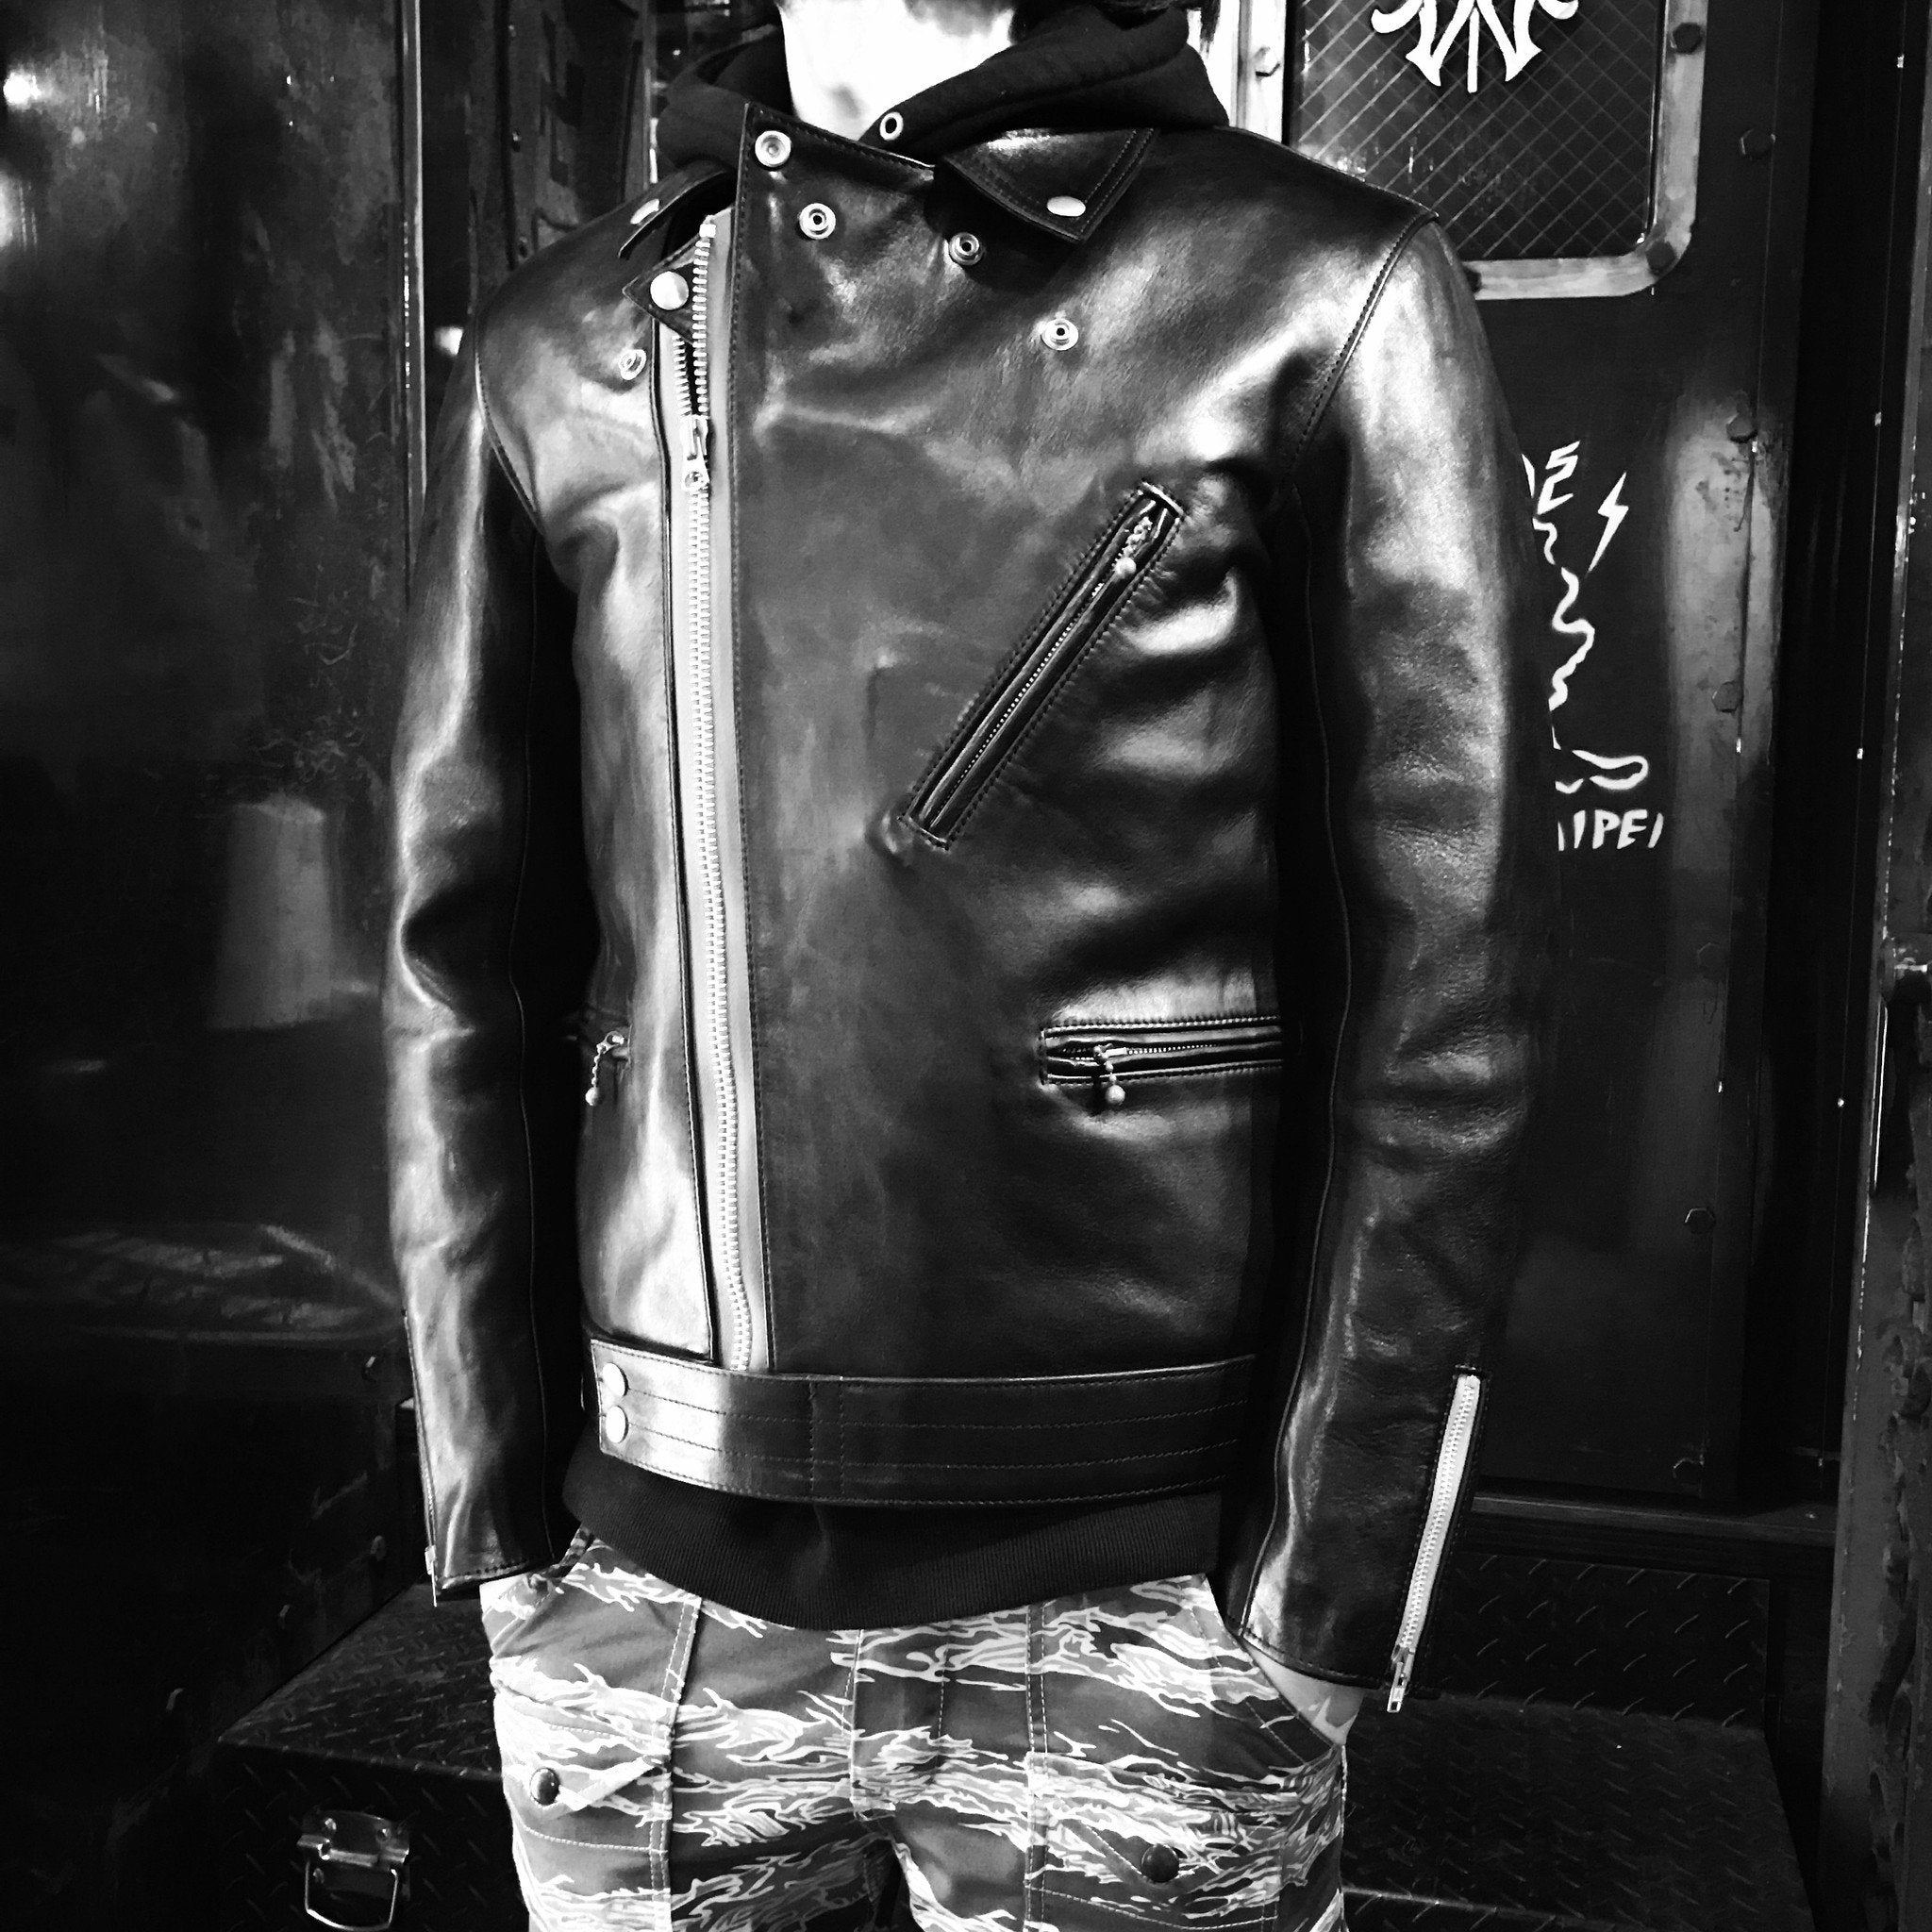 May club -【Addict Clothes】AD-03 Horsehide British Asymmetry Jacket - Black